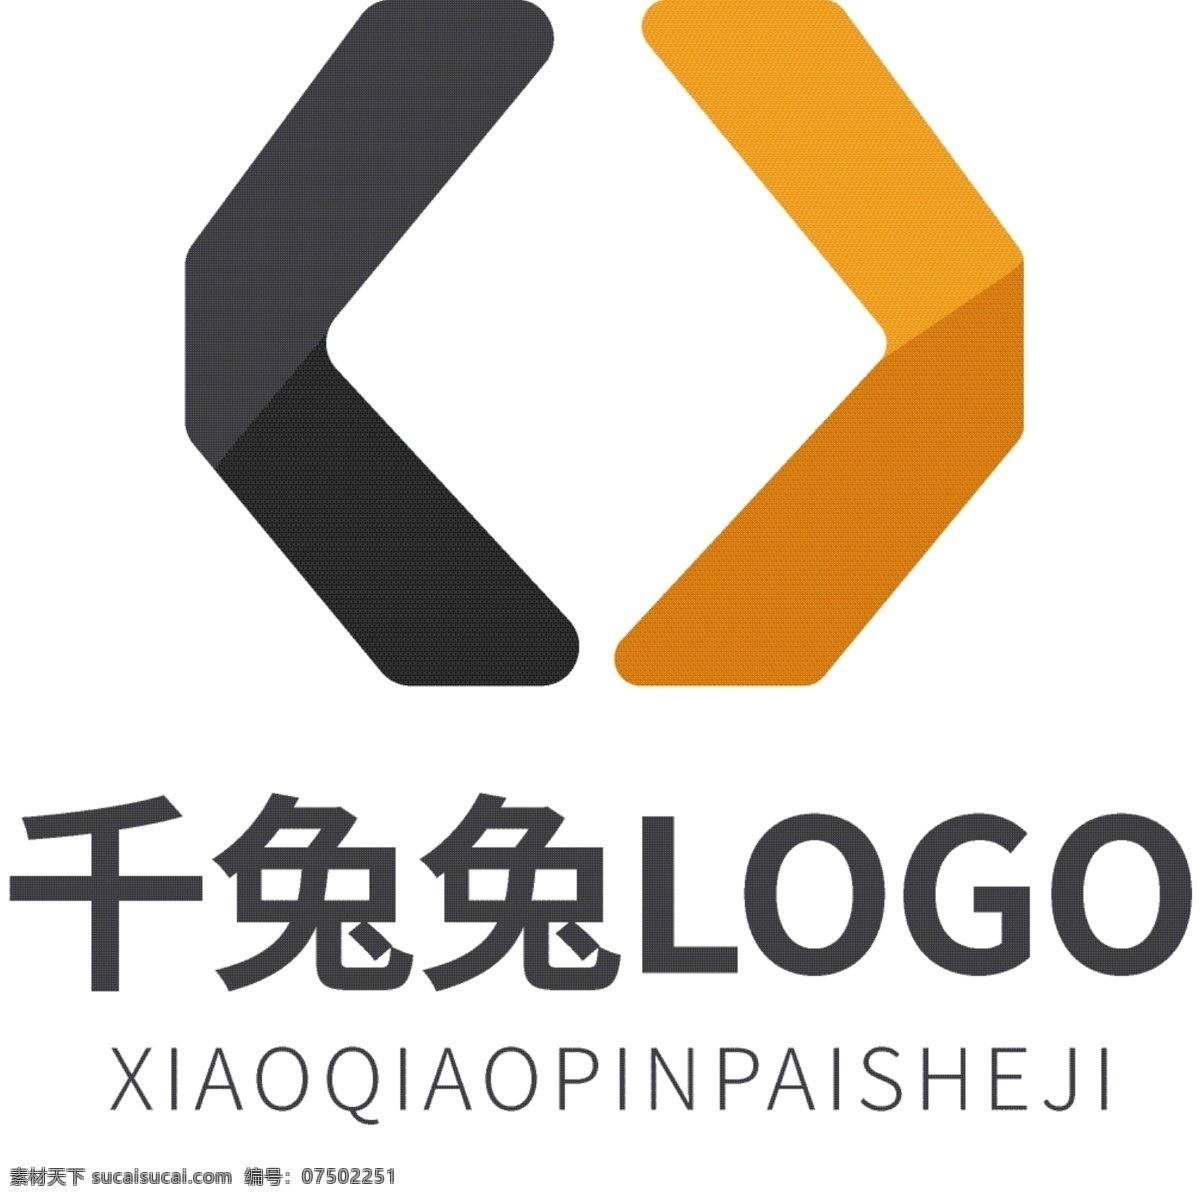 企业 简约 图形 logo 企业logo 个人logo 菱形logo 科技logo 双色logo 创意logo